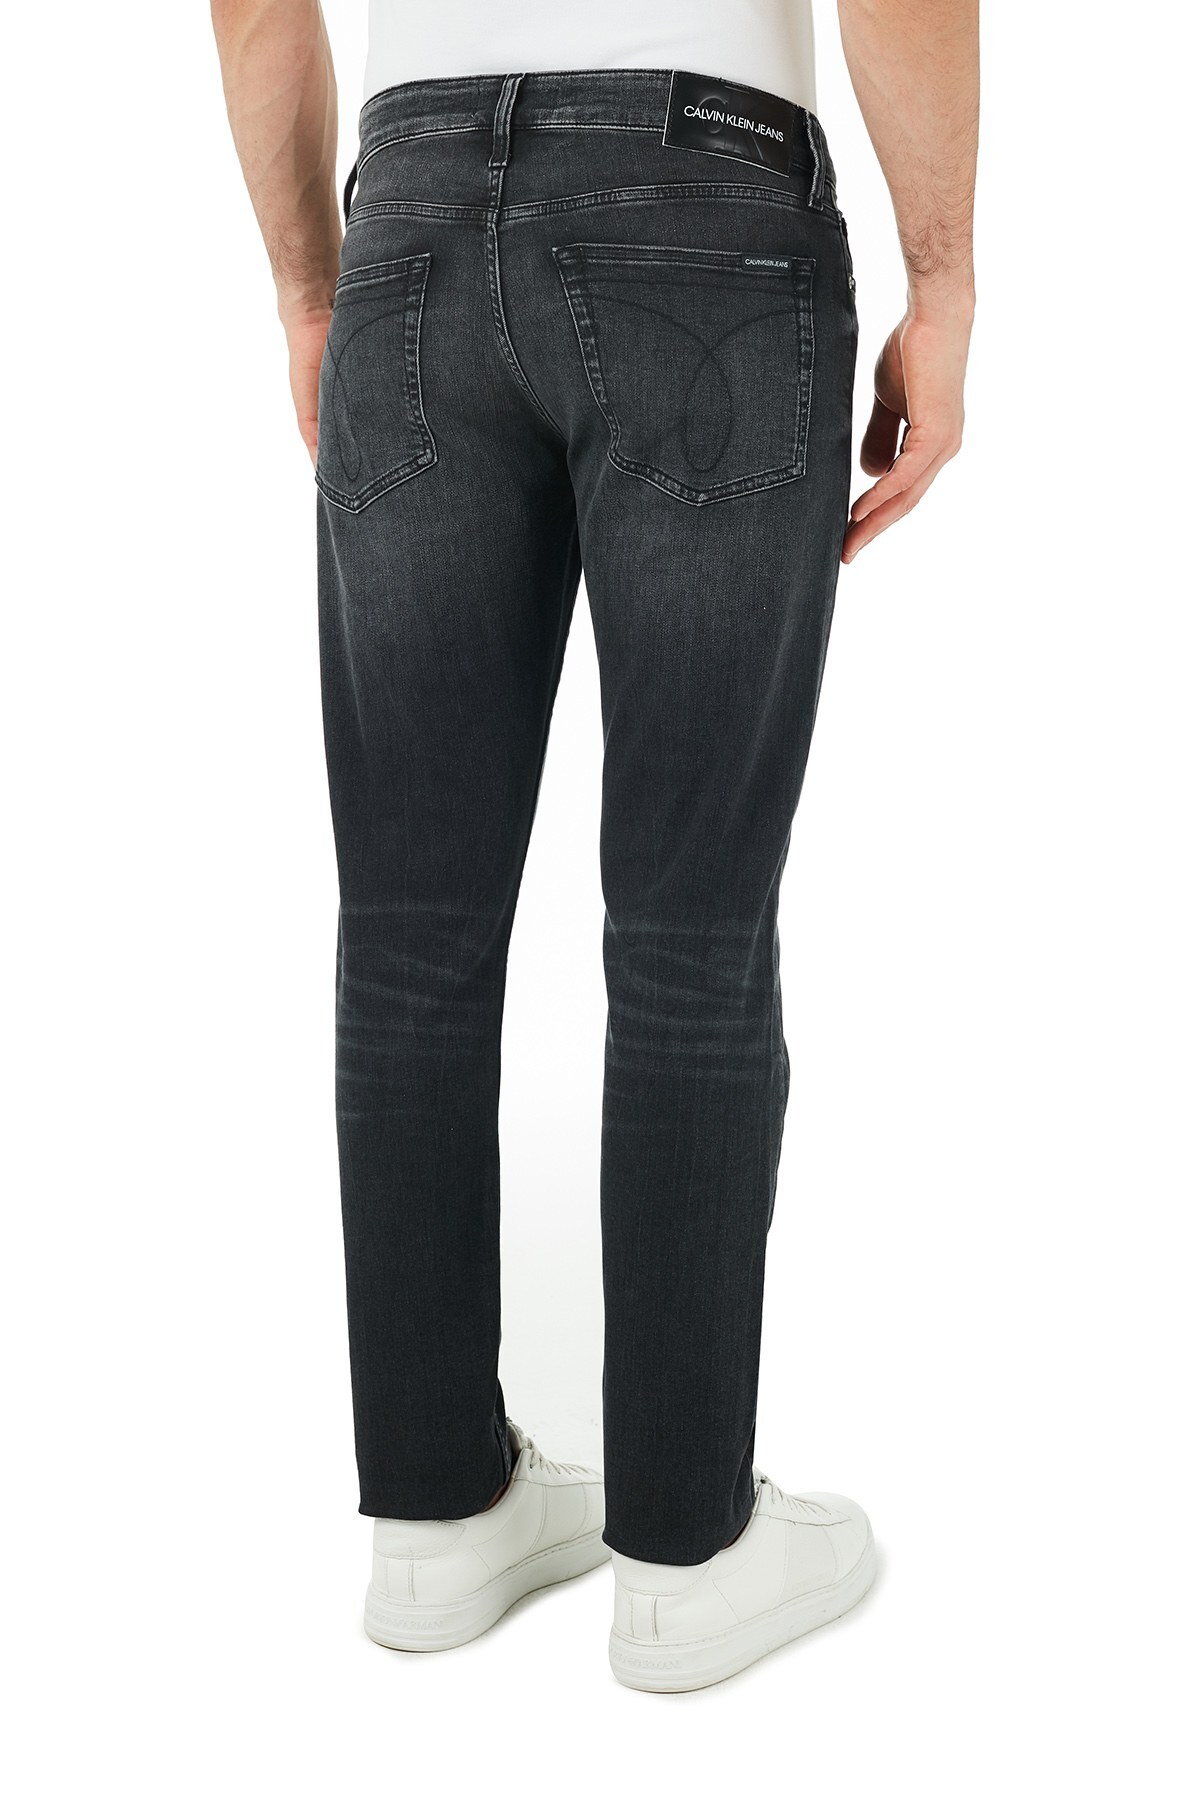 Calvin Klein Slim Fit Düşük Bel Pamuklu Jeans Erkek Kot Pantolon J30J315566 1BY SİYAH